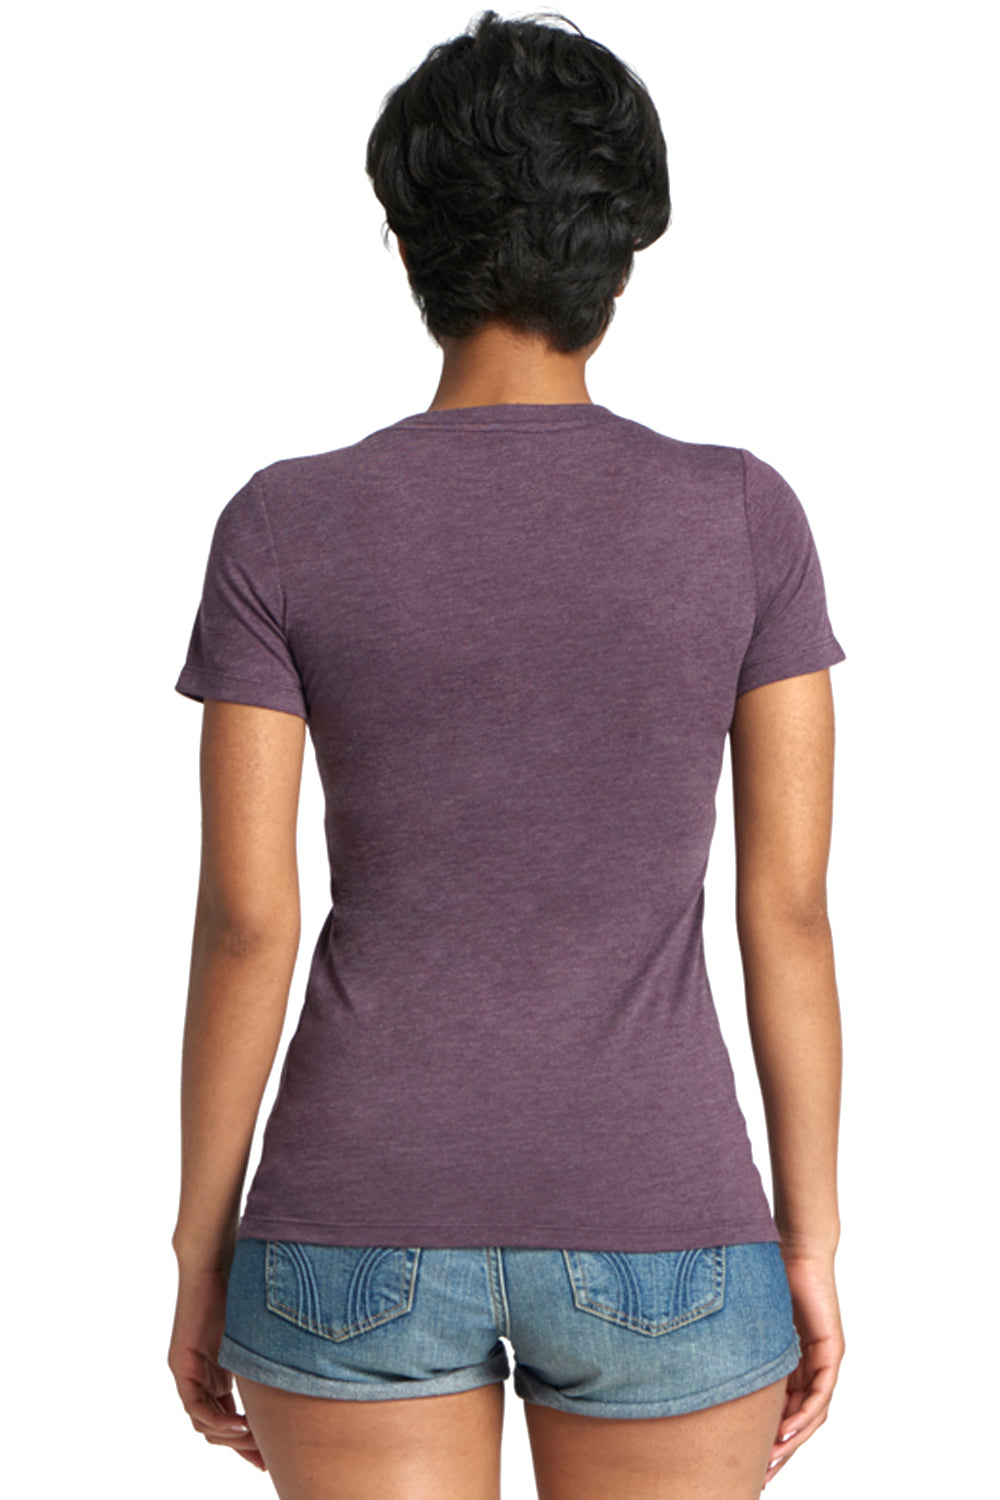 Next Level 6710 Jersey Short Sleeve Crewneck T-Shirt Vintage Purple Back